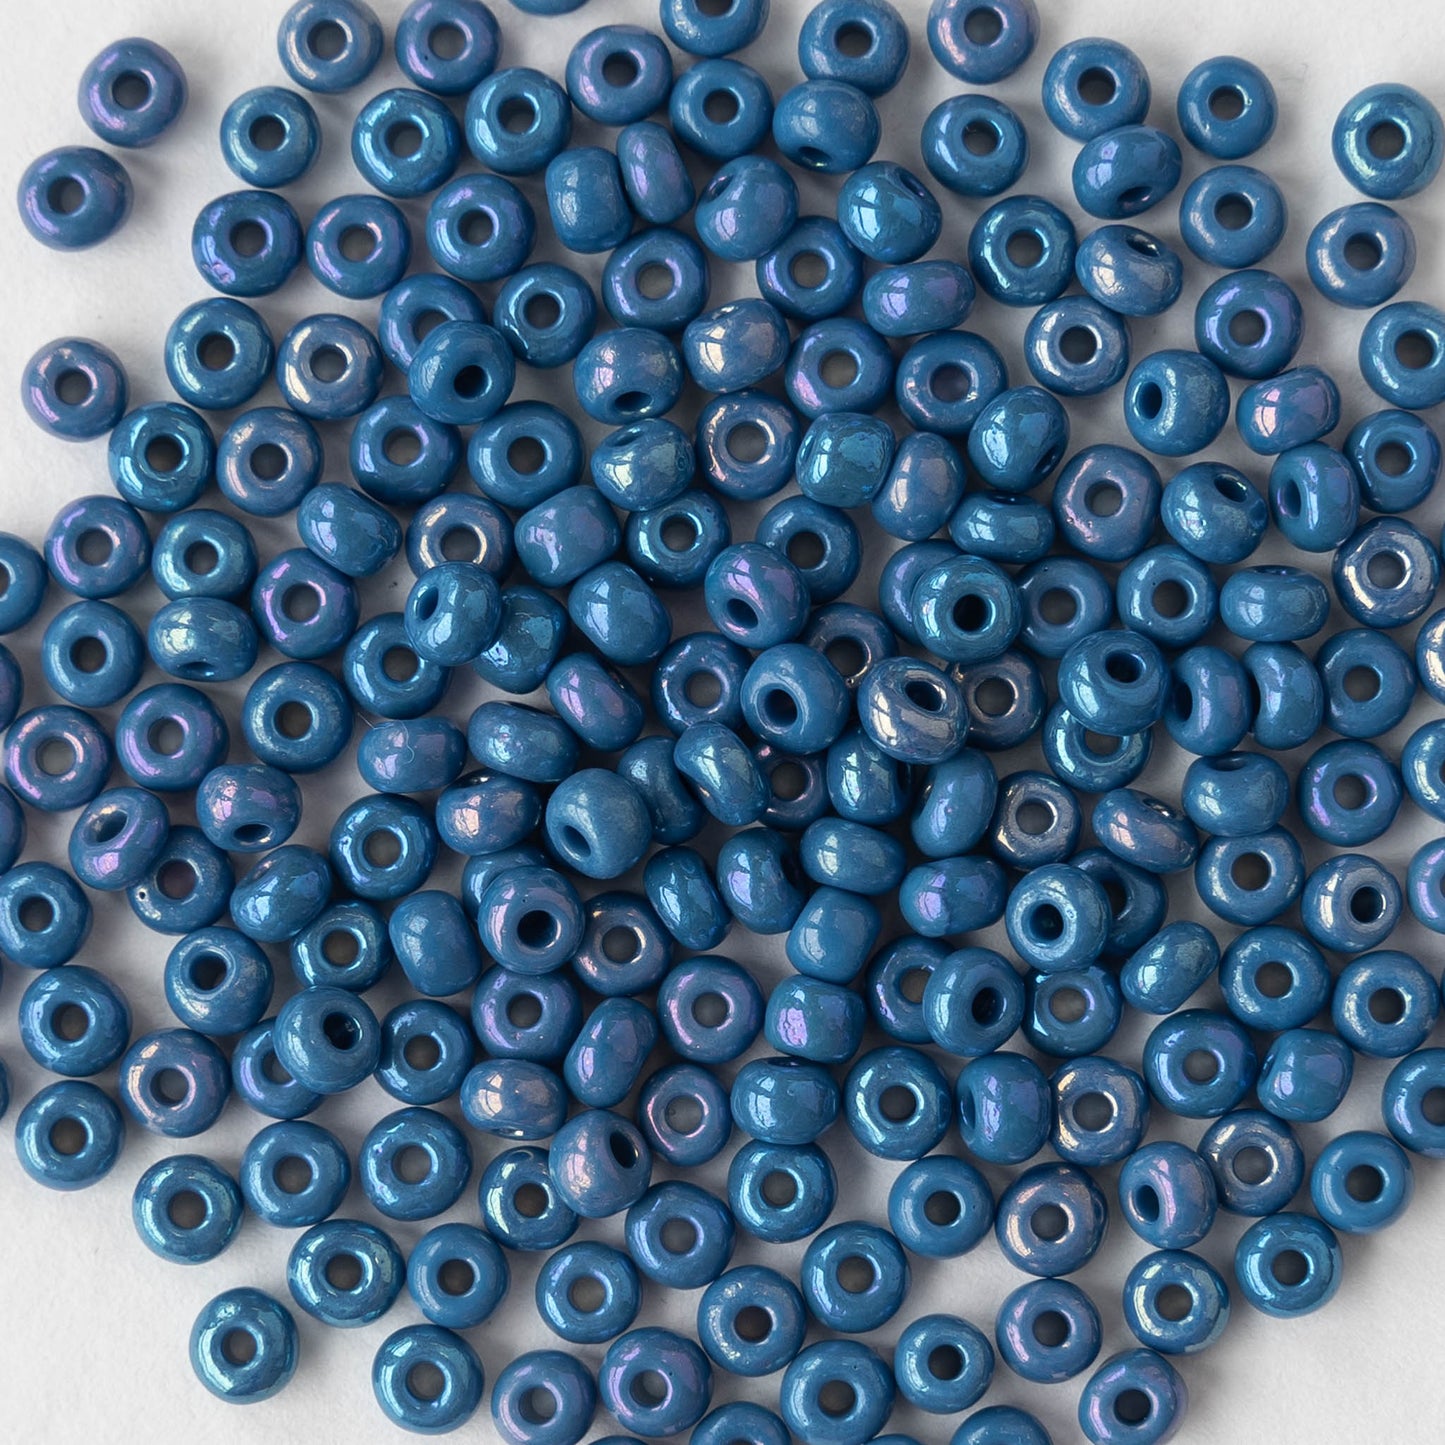 6/0 Seed Beads - Opaque Slate Blue AB - 2 Strands